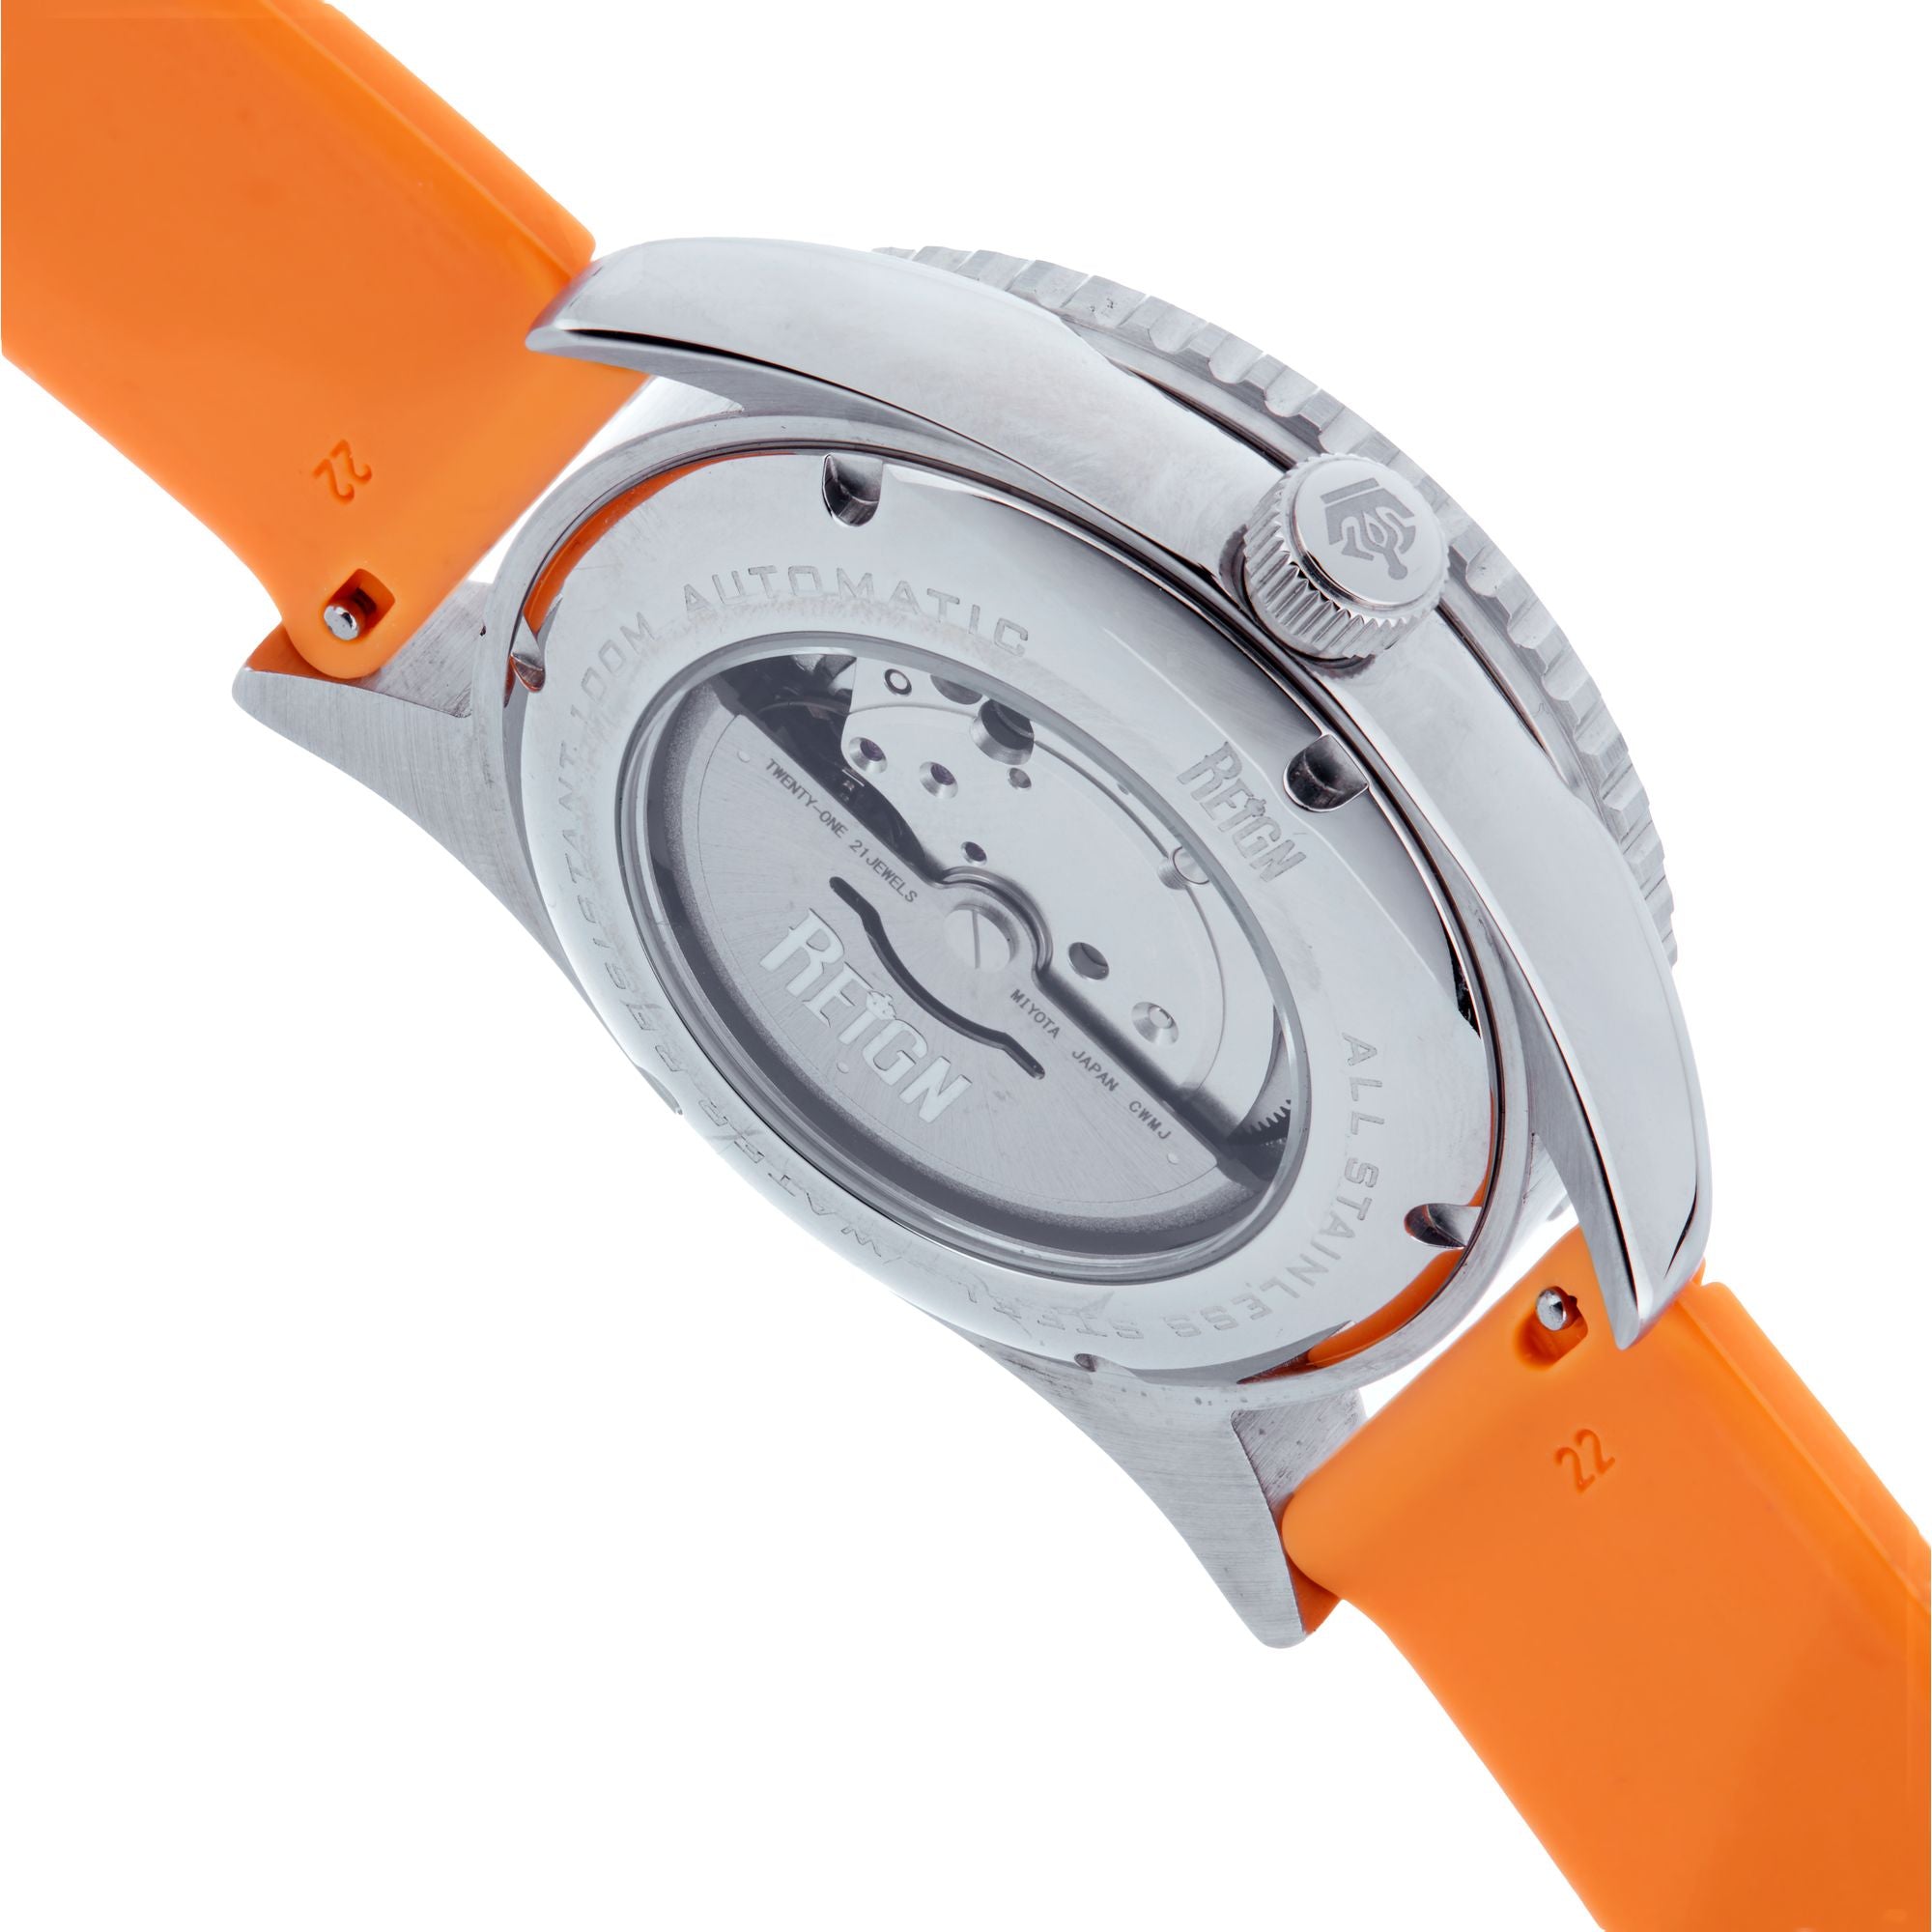 Reign Gage Automatic Watch w/Date - Red/Orange - REIRN6602